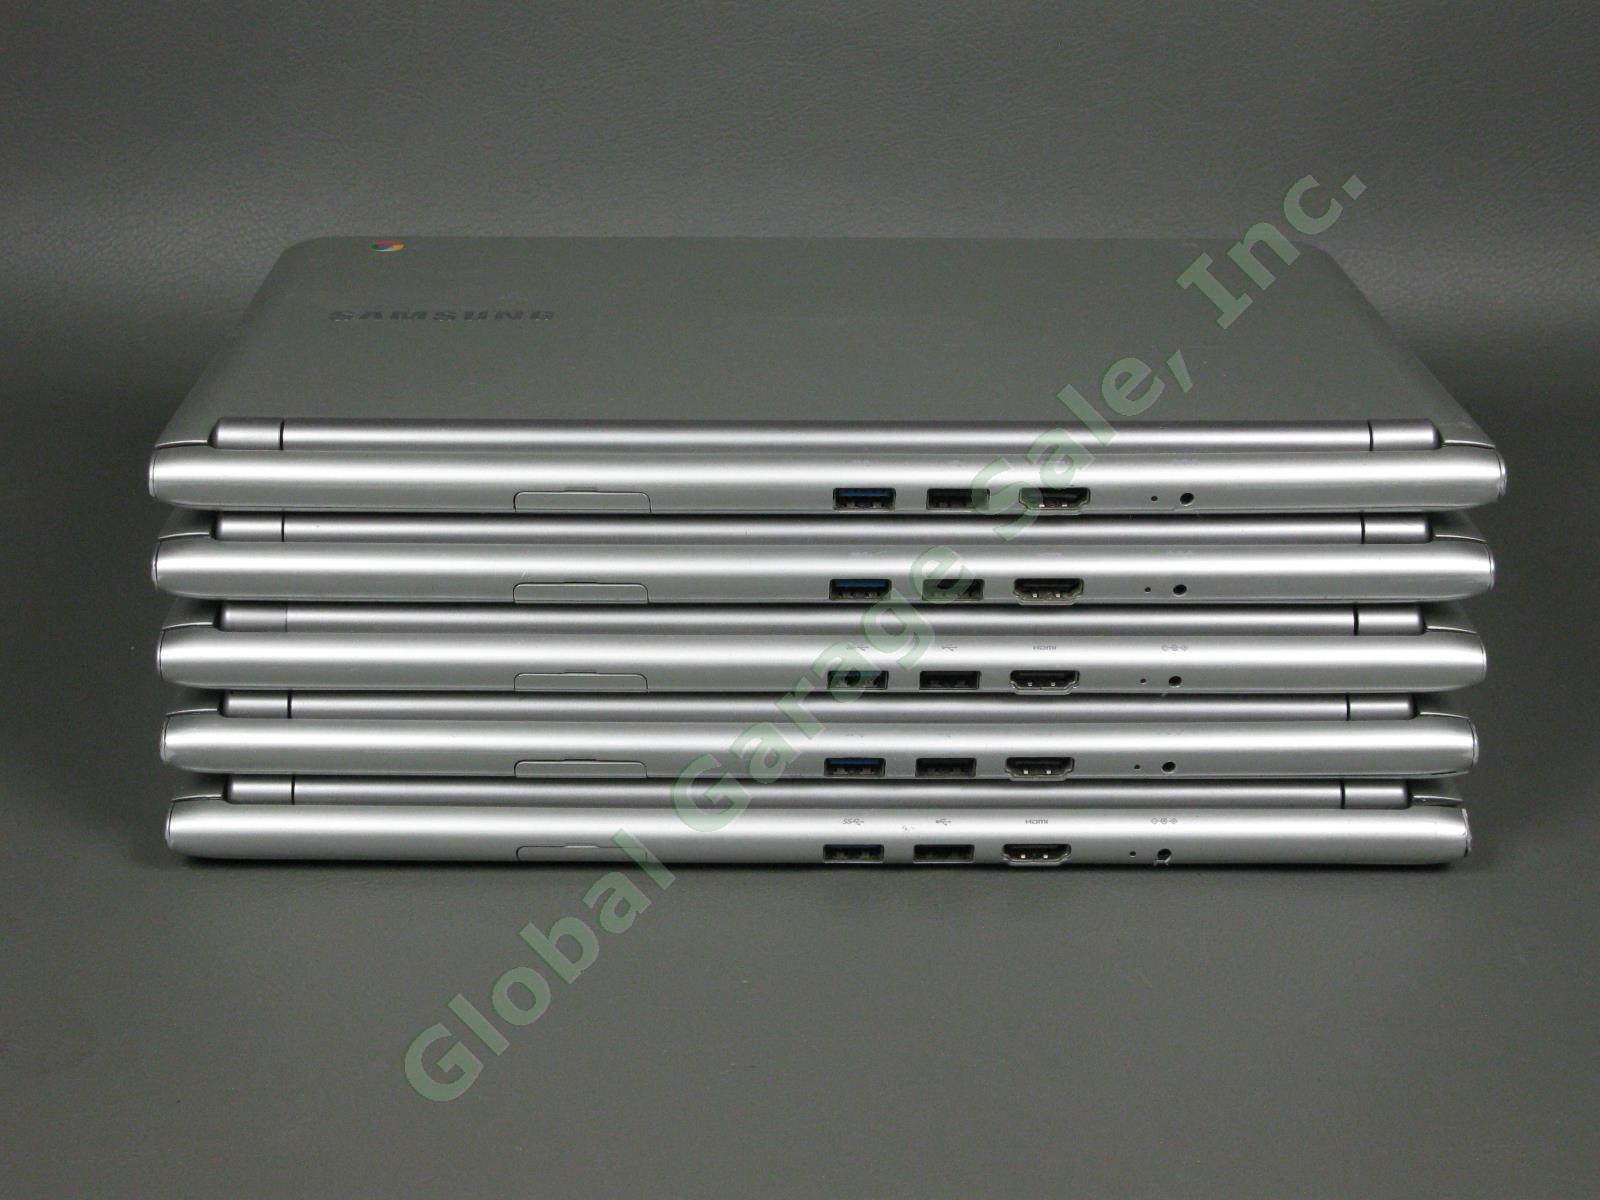 5 Samsung Chromebook 303C Laptop Computers Lot 11.6" 1.7GHz 2GB 16GB XE303C12 4